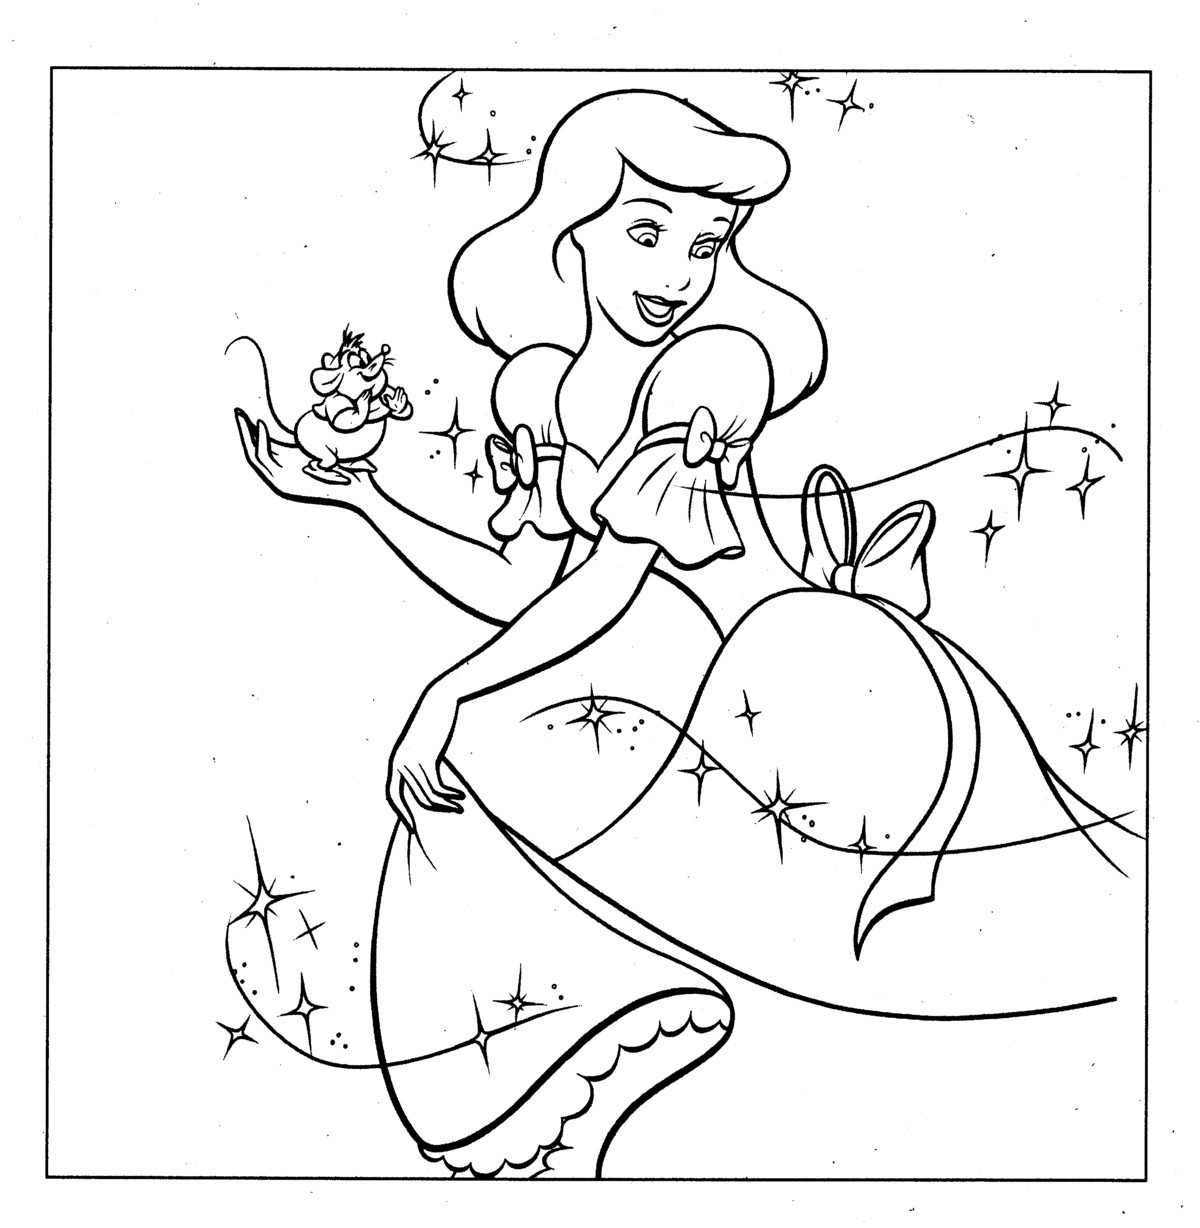 Printing Princess Coloring Pages
 Free Printable Disney Princess Coloring Pages For Kids